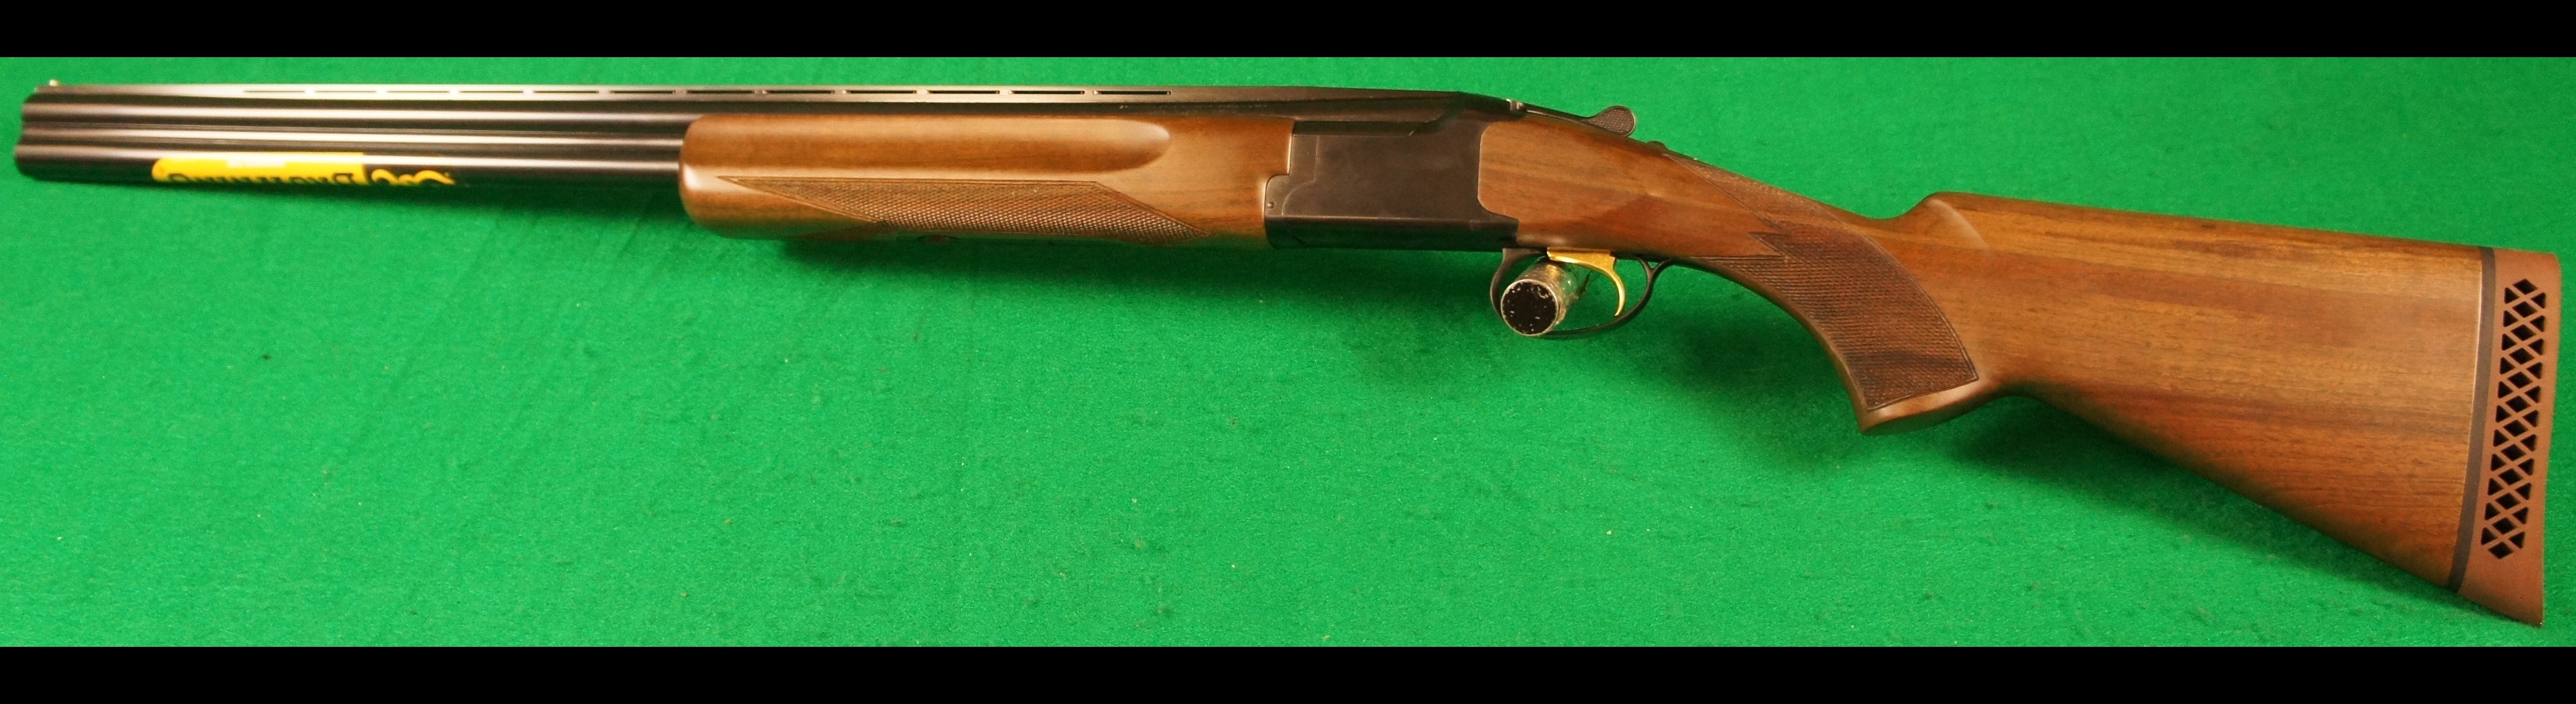 Weapons Shotgun 2926x800